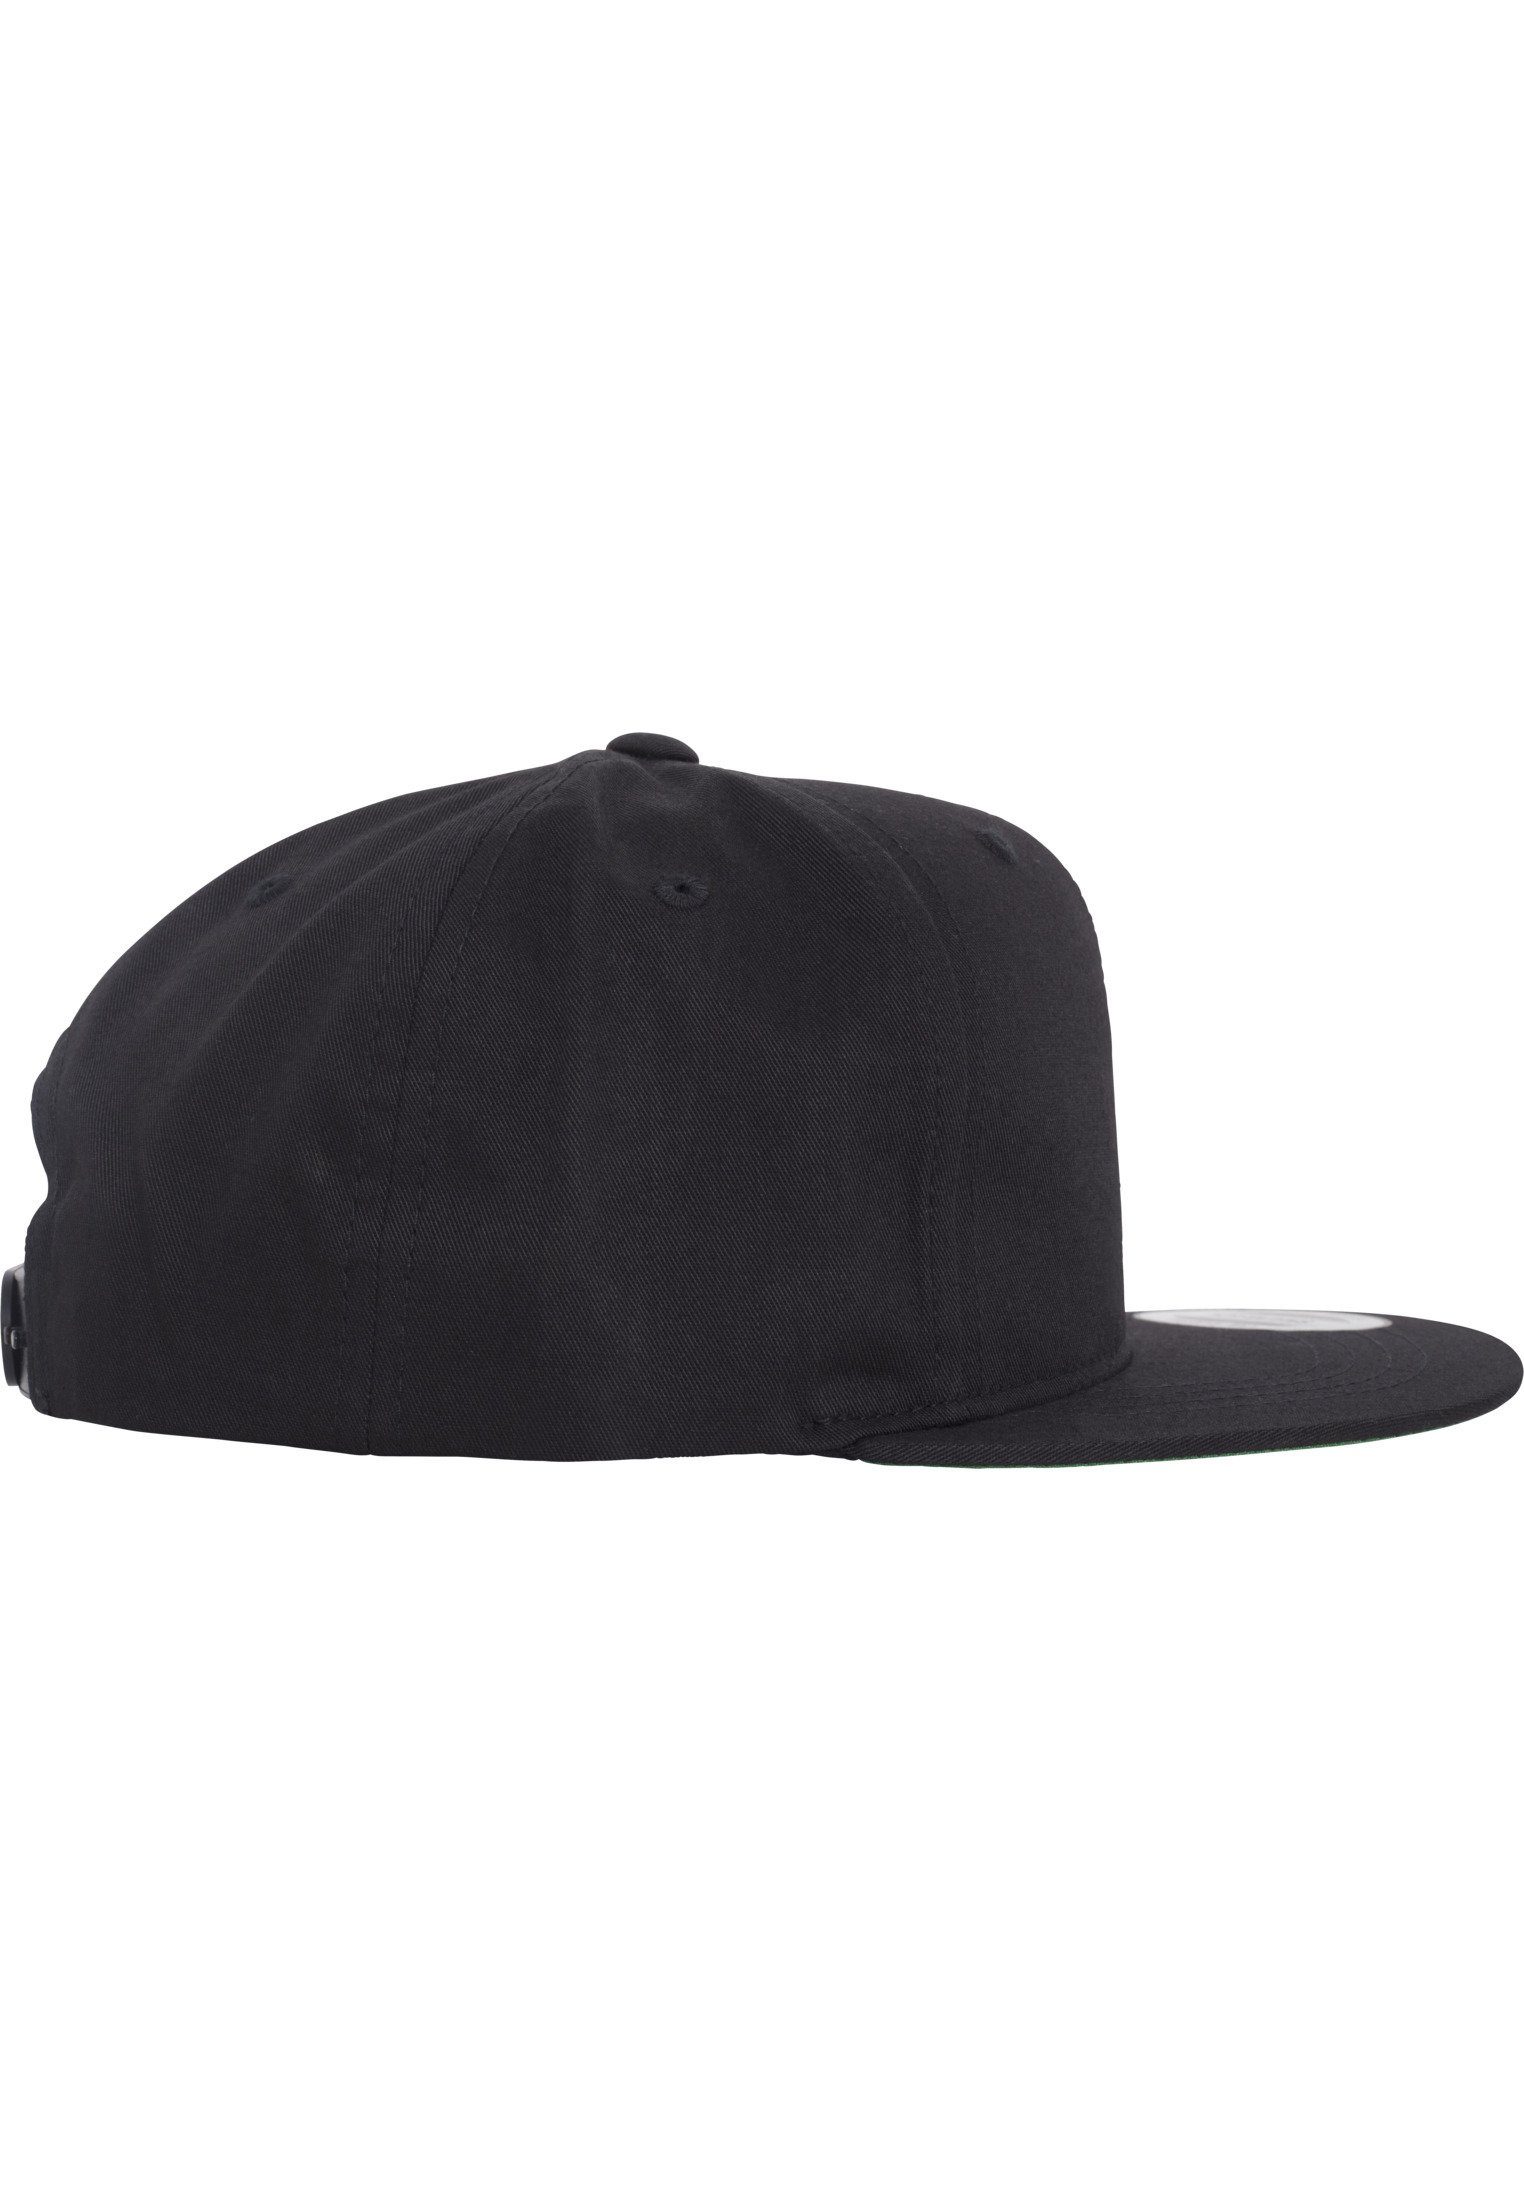 Flexfit Twill Youth Cap Snapback Snapback Flex black Cap Pro-Style